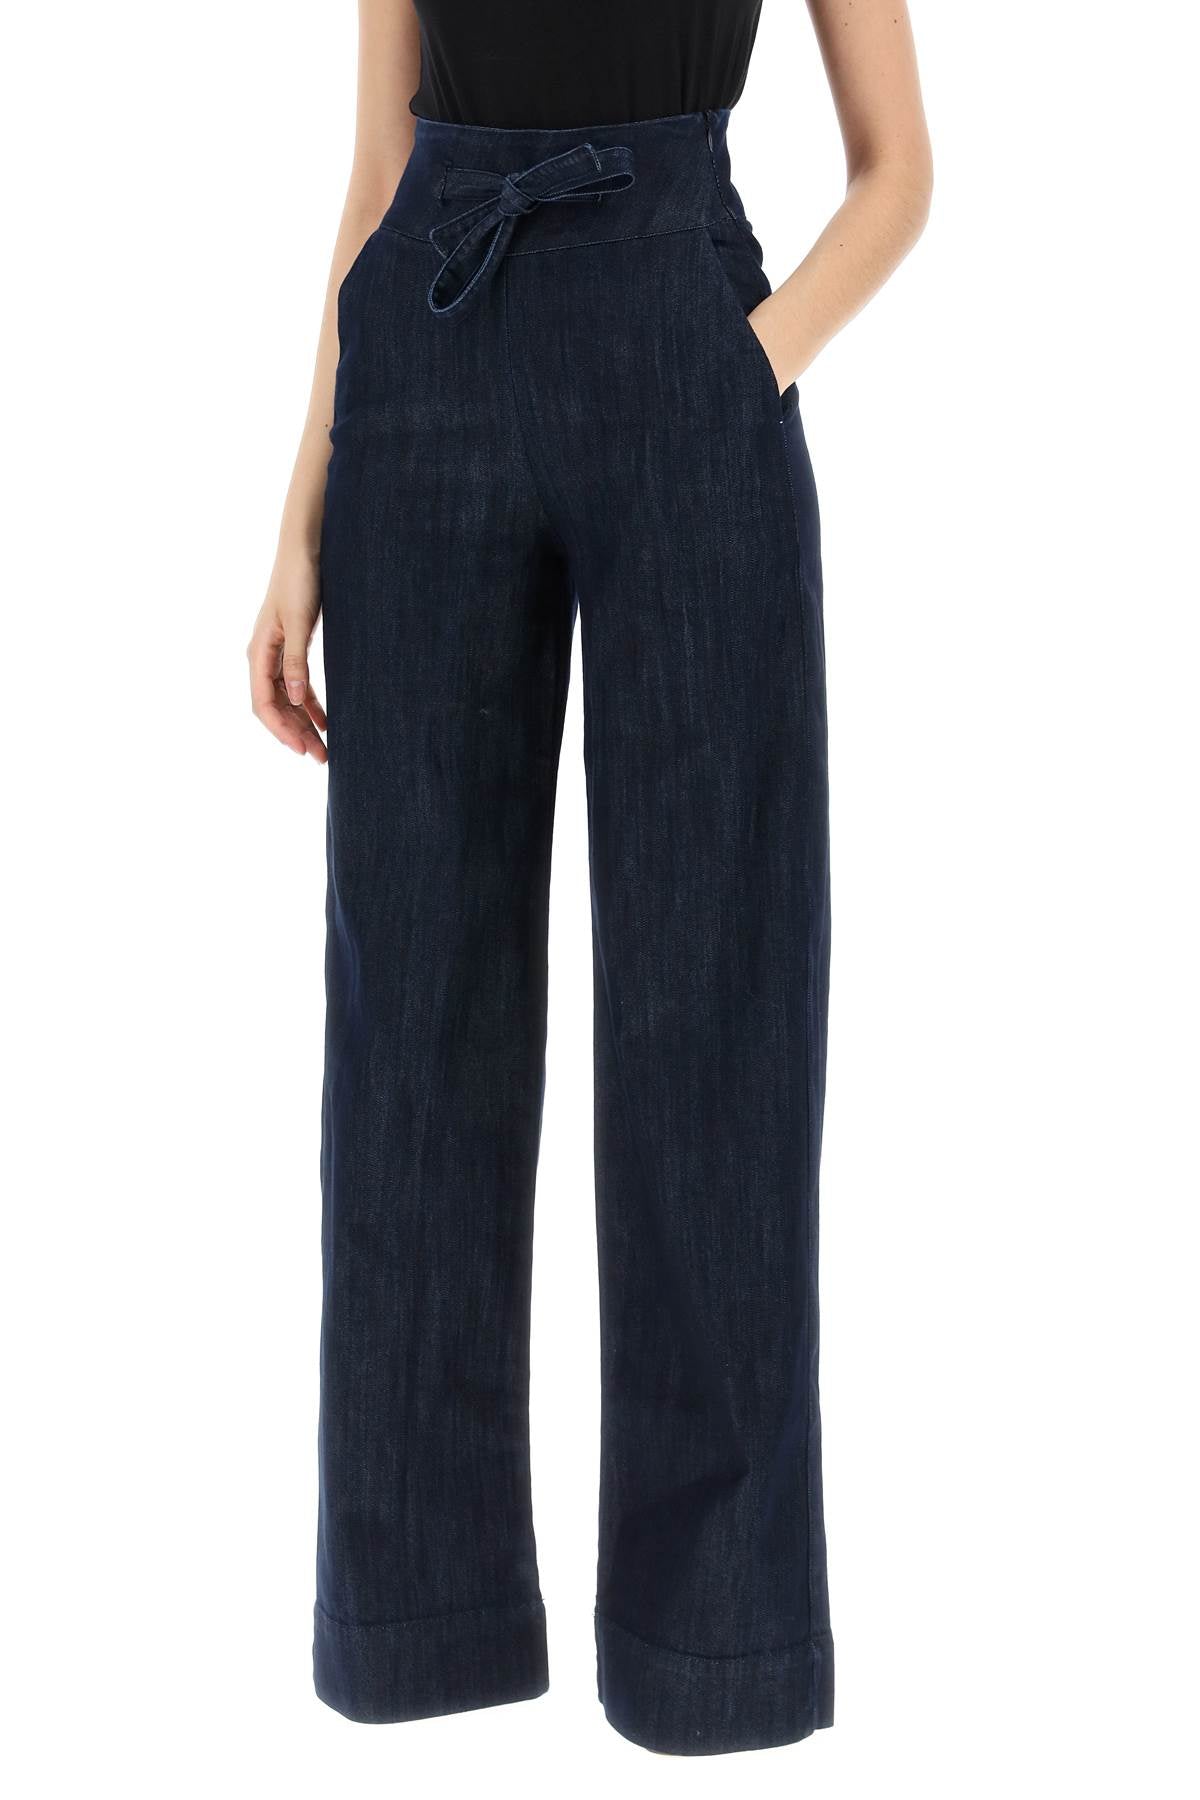 Mvp wardrobe tolone jeans-3